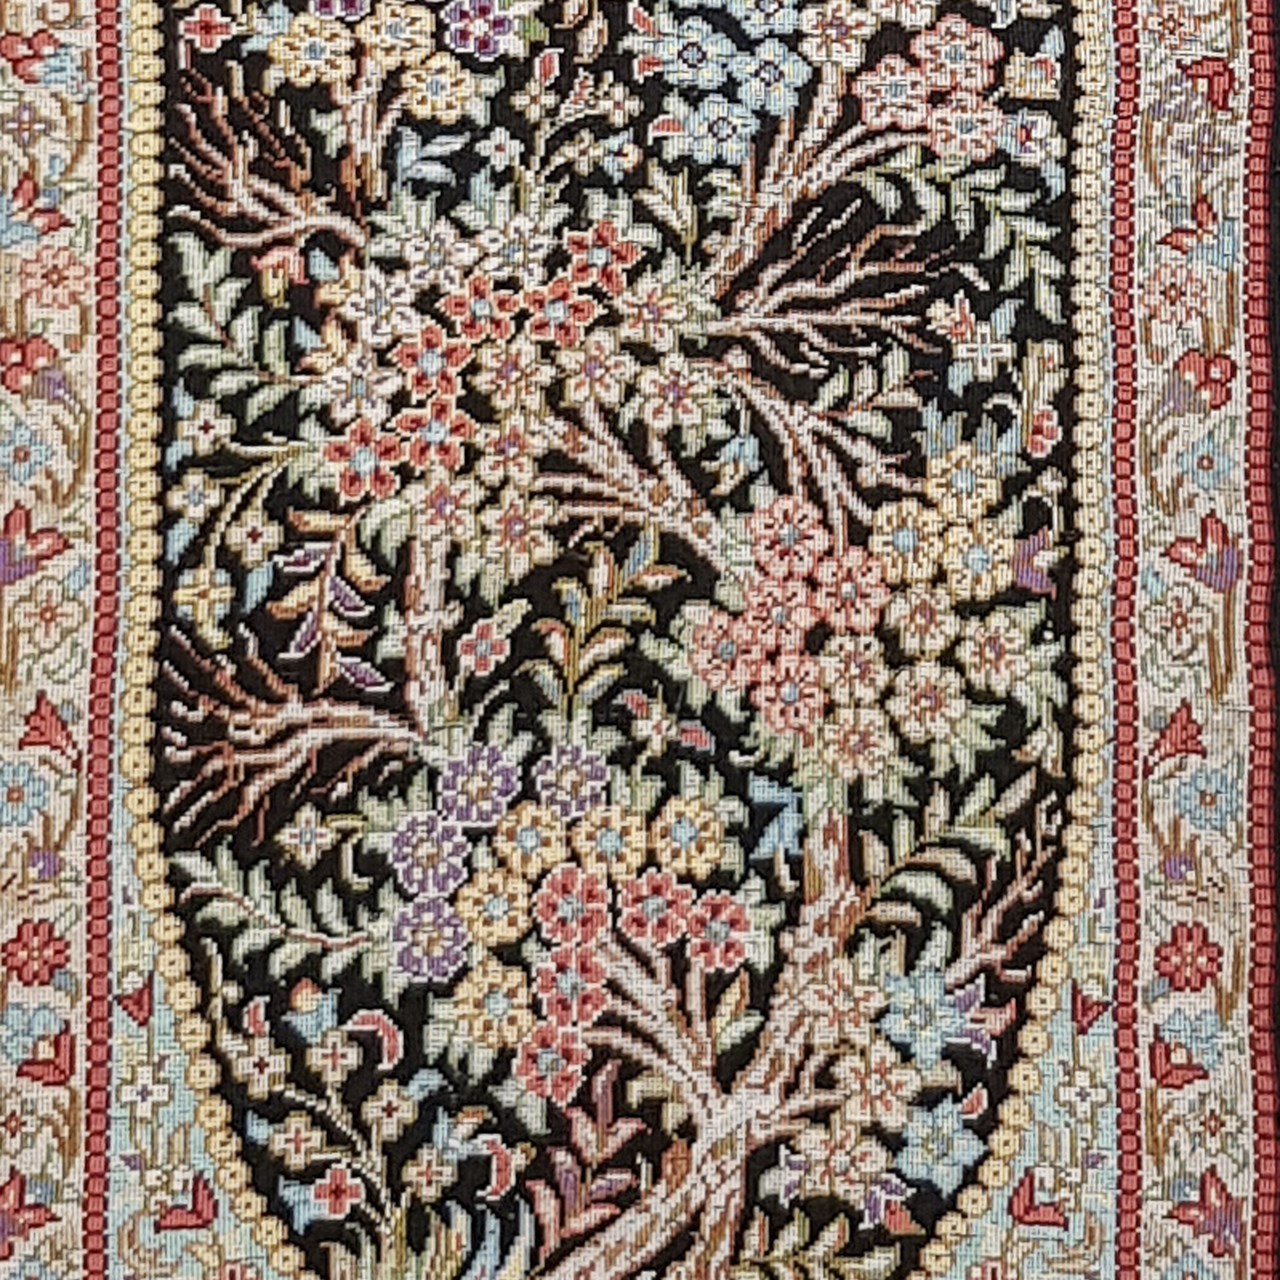 Pictorial Tabriz Carpet Ref: 911166